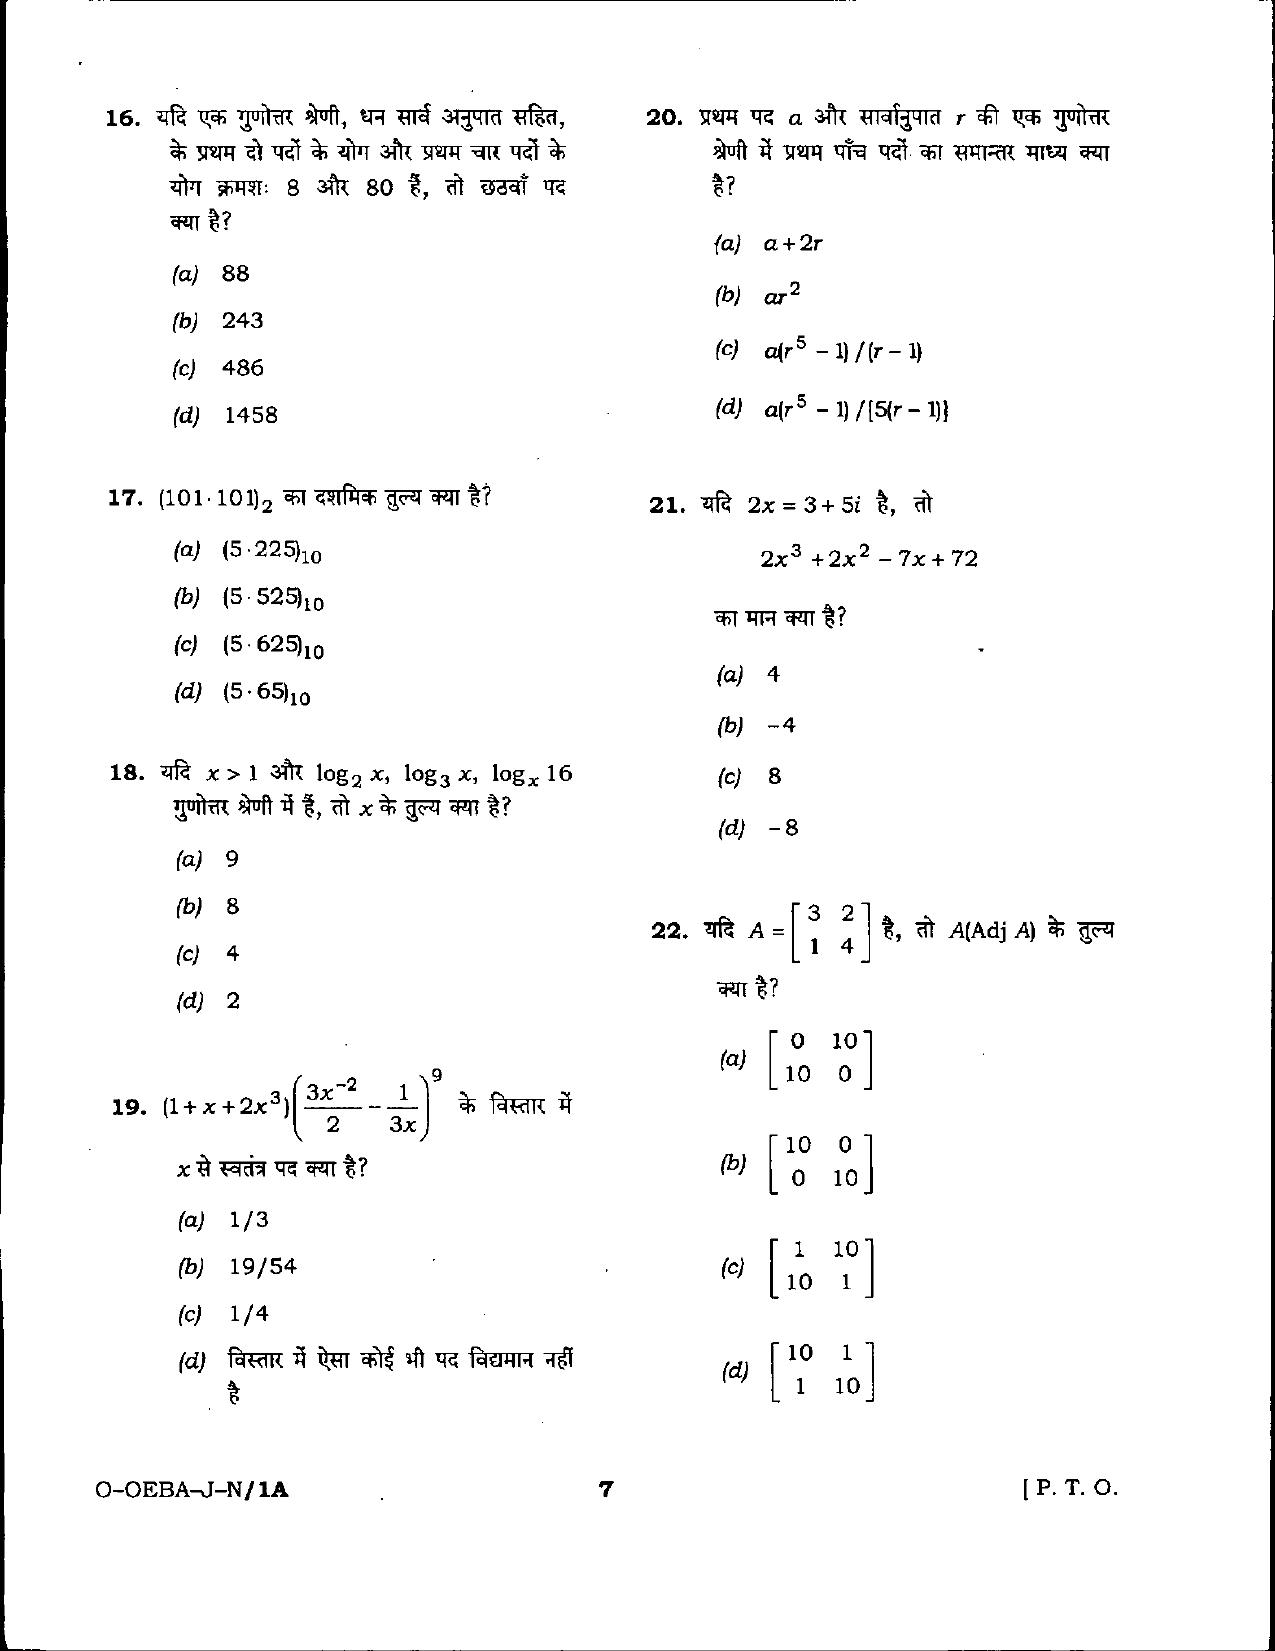 Odisha Junior Clerk Question Paper - General Mathematics - Page 7